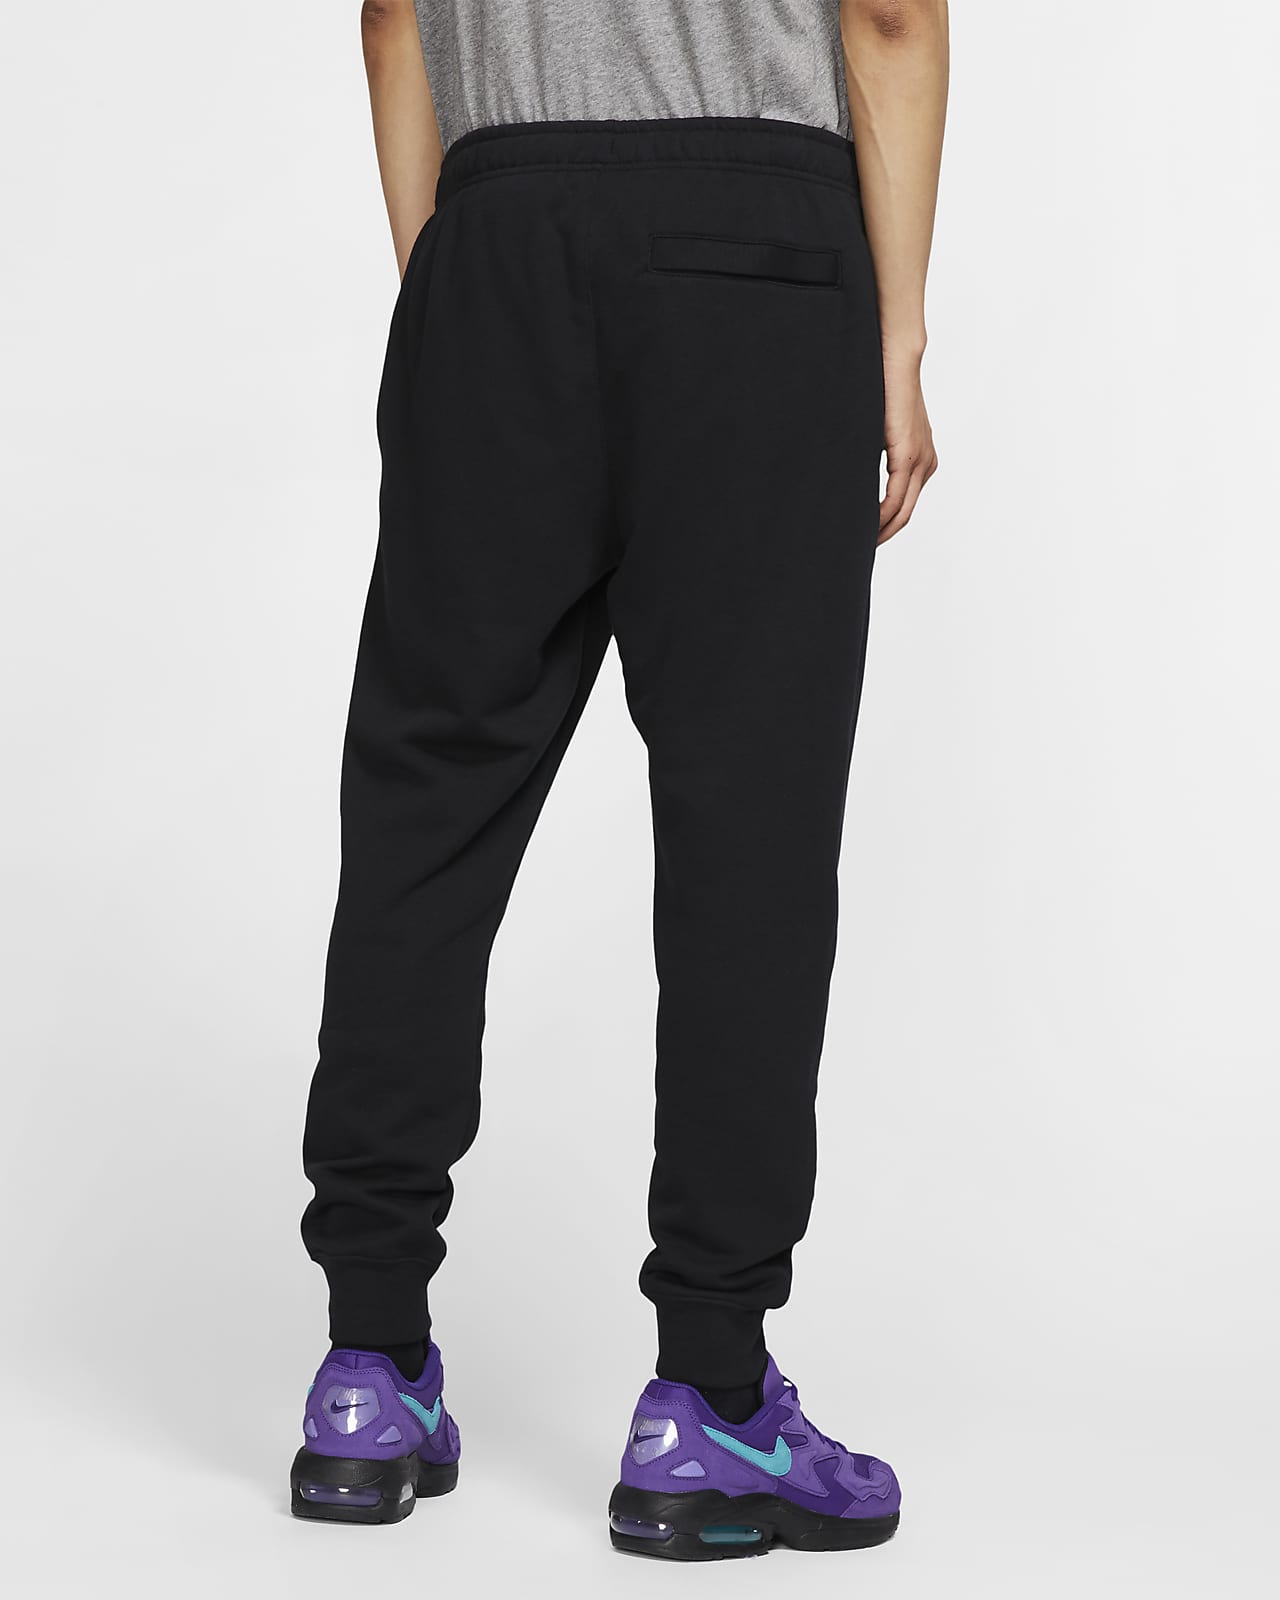  Nike Men's Club Fleece Pants (Black/White, Small) : Clothing,  Shoes & Jewelry